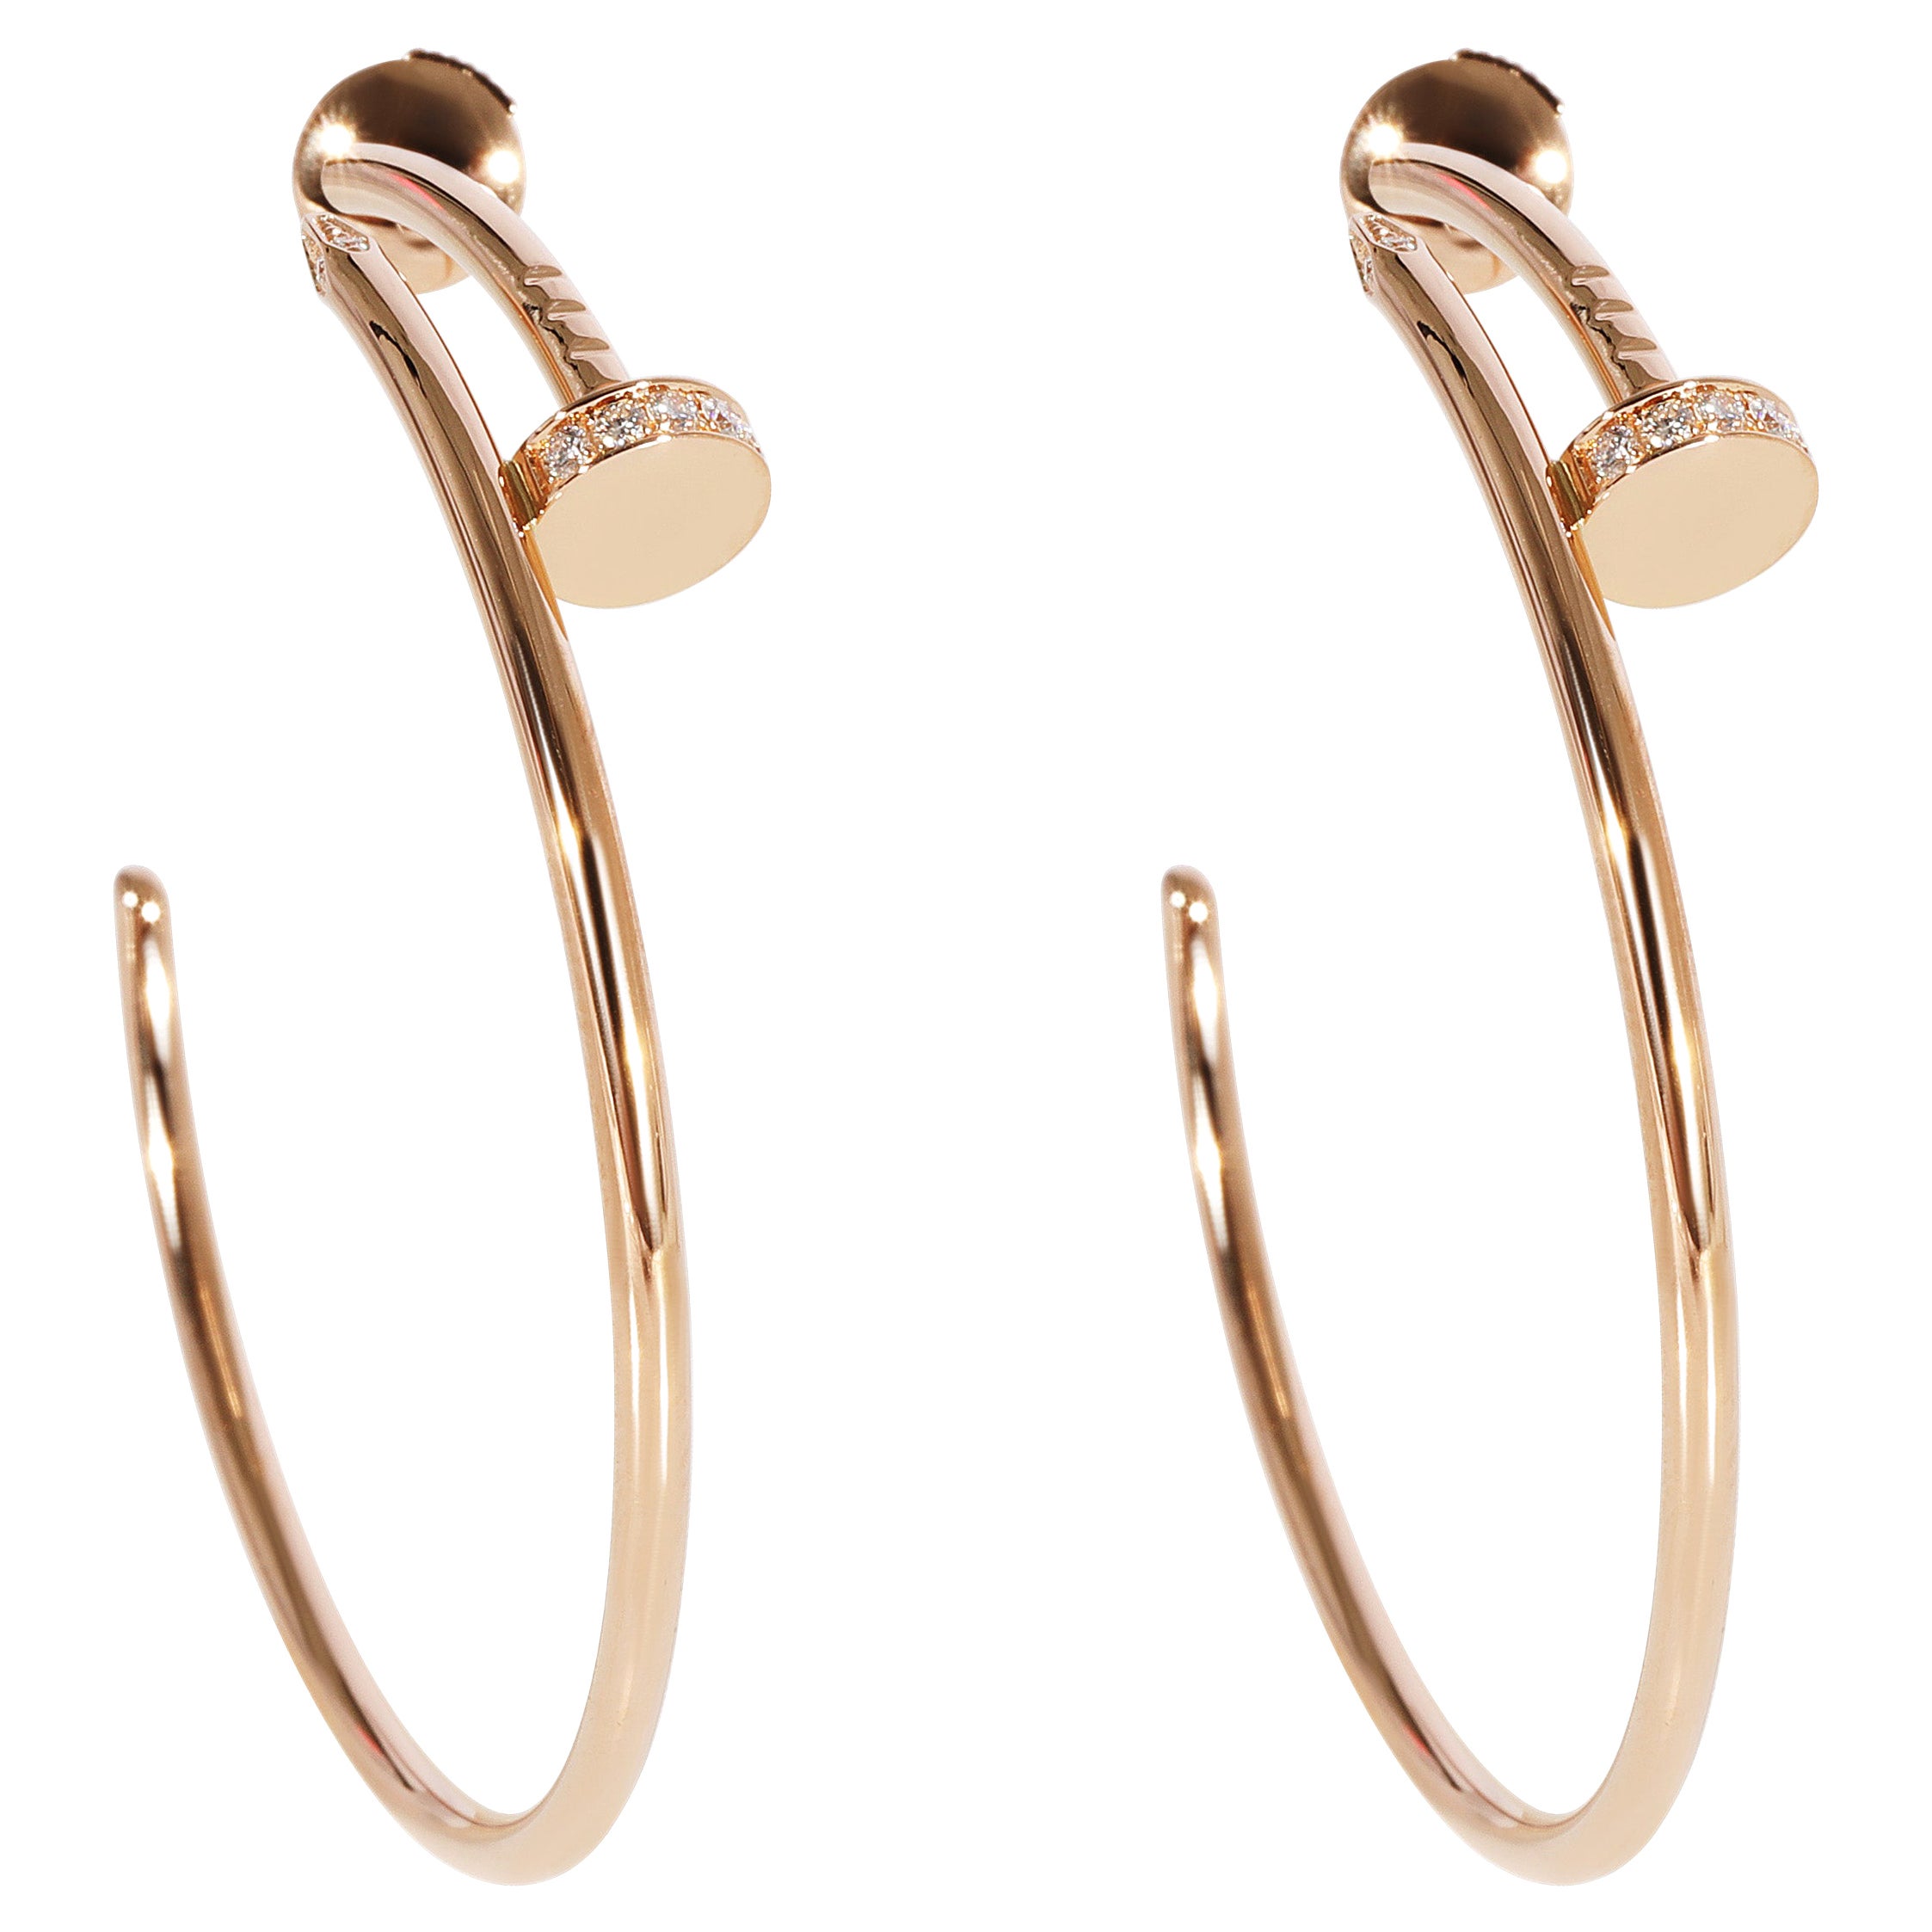 Cartier Juste un Clou Earrings in 18k Rose Gold 0.17 CTW